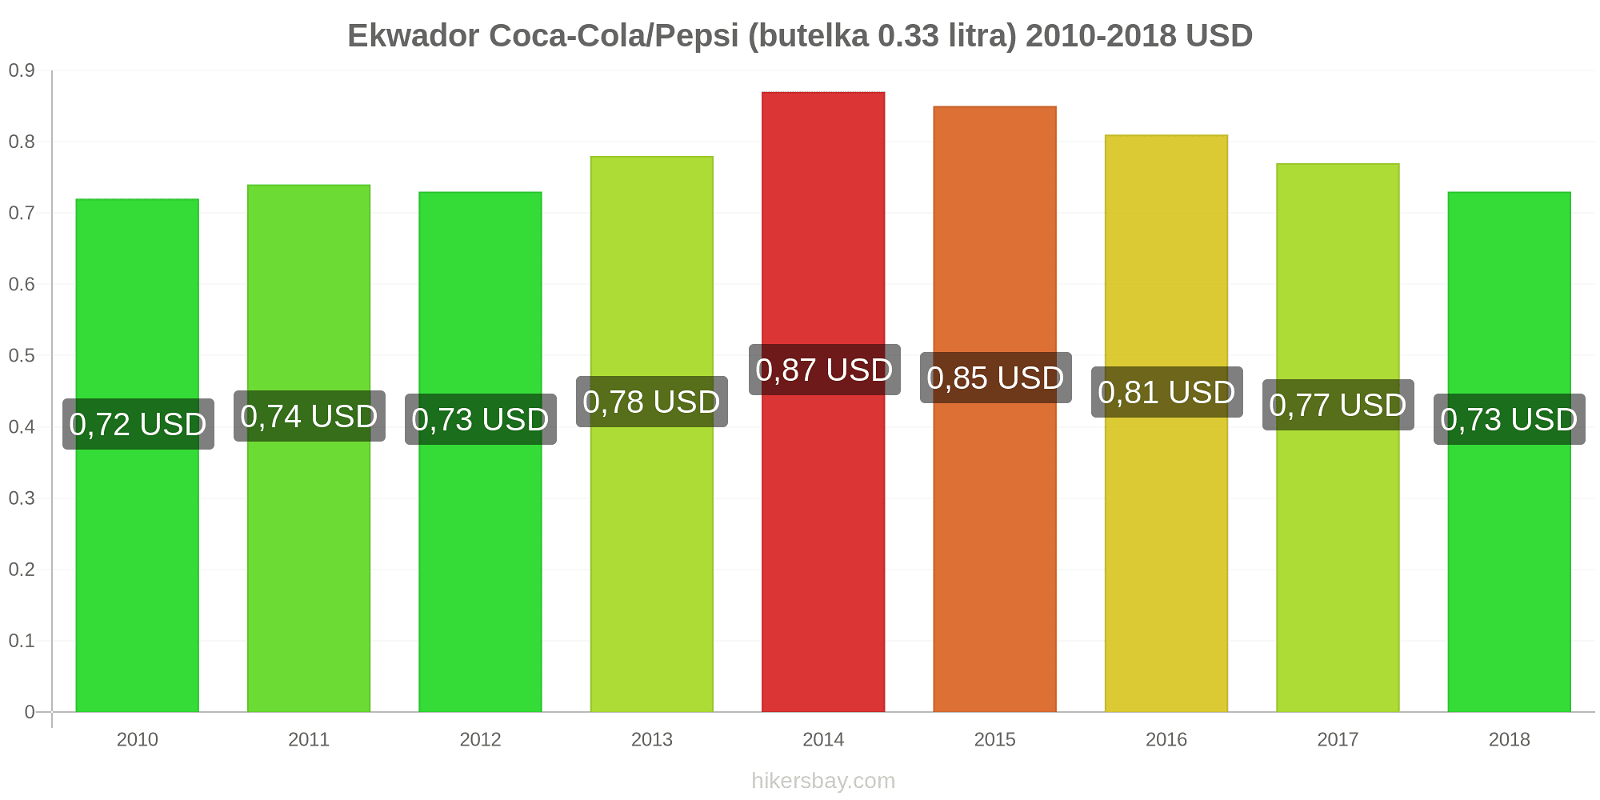 Ekwador zmiany cen Coca-Cola/Pepsi (butelka 0.33 litra) hikersbay.com